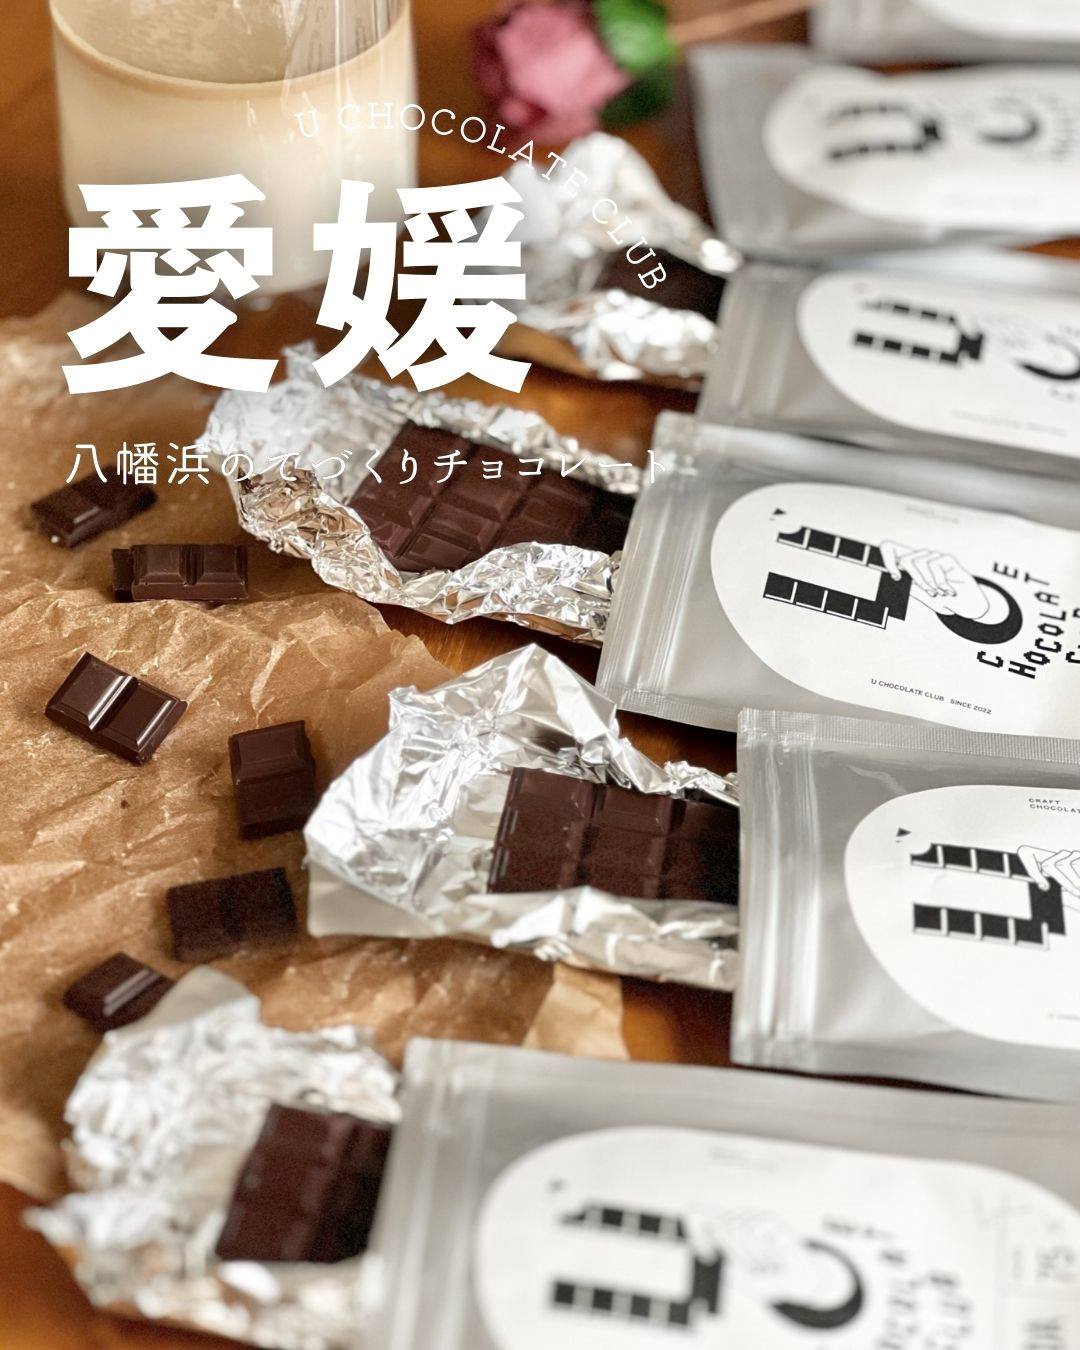 U chocolate club 愛媛